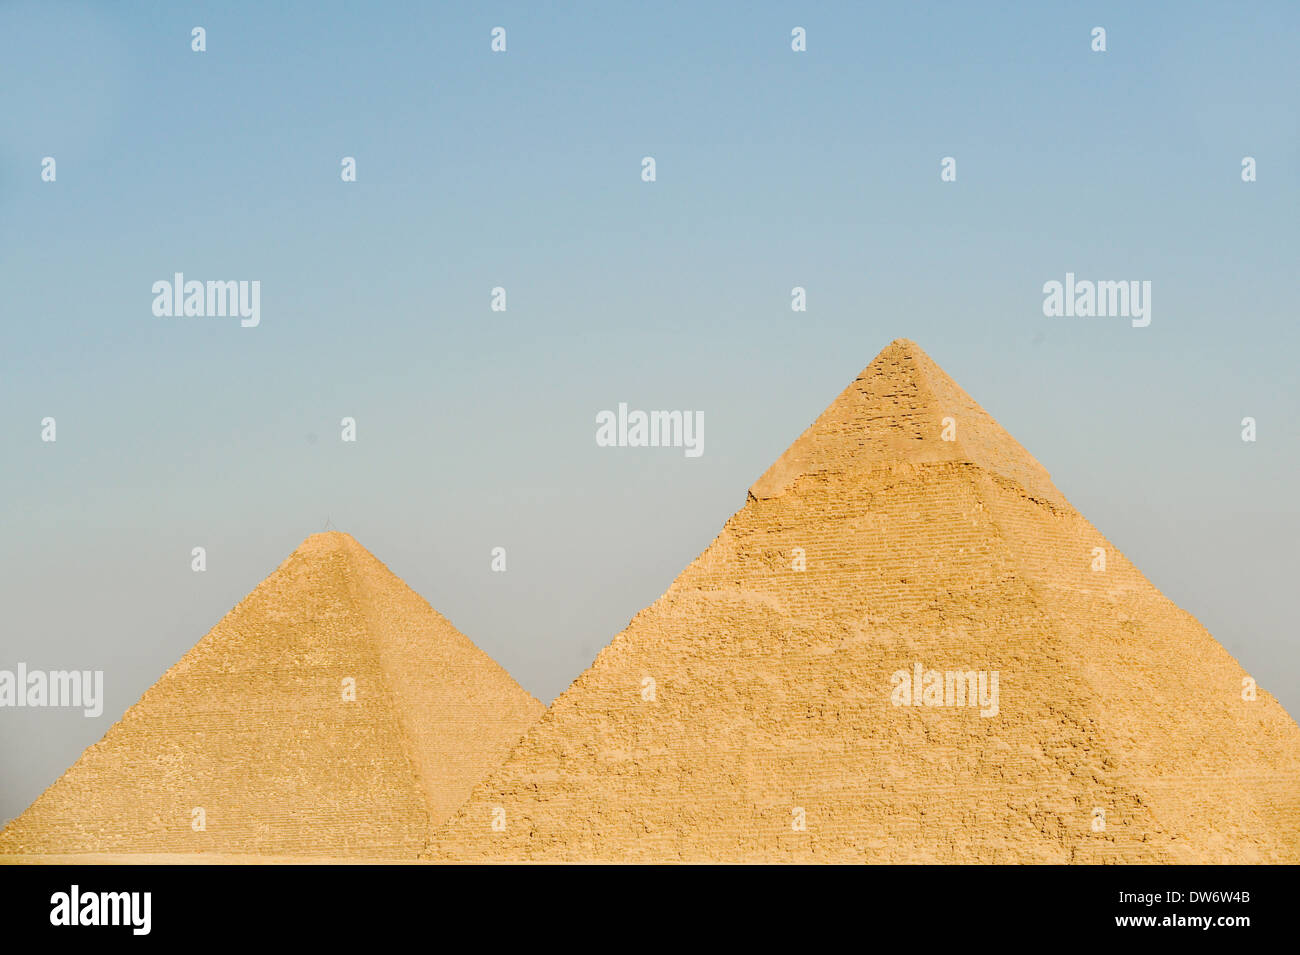 The pyramids of Giza in Egypt. Stock Photo